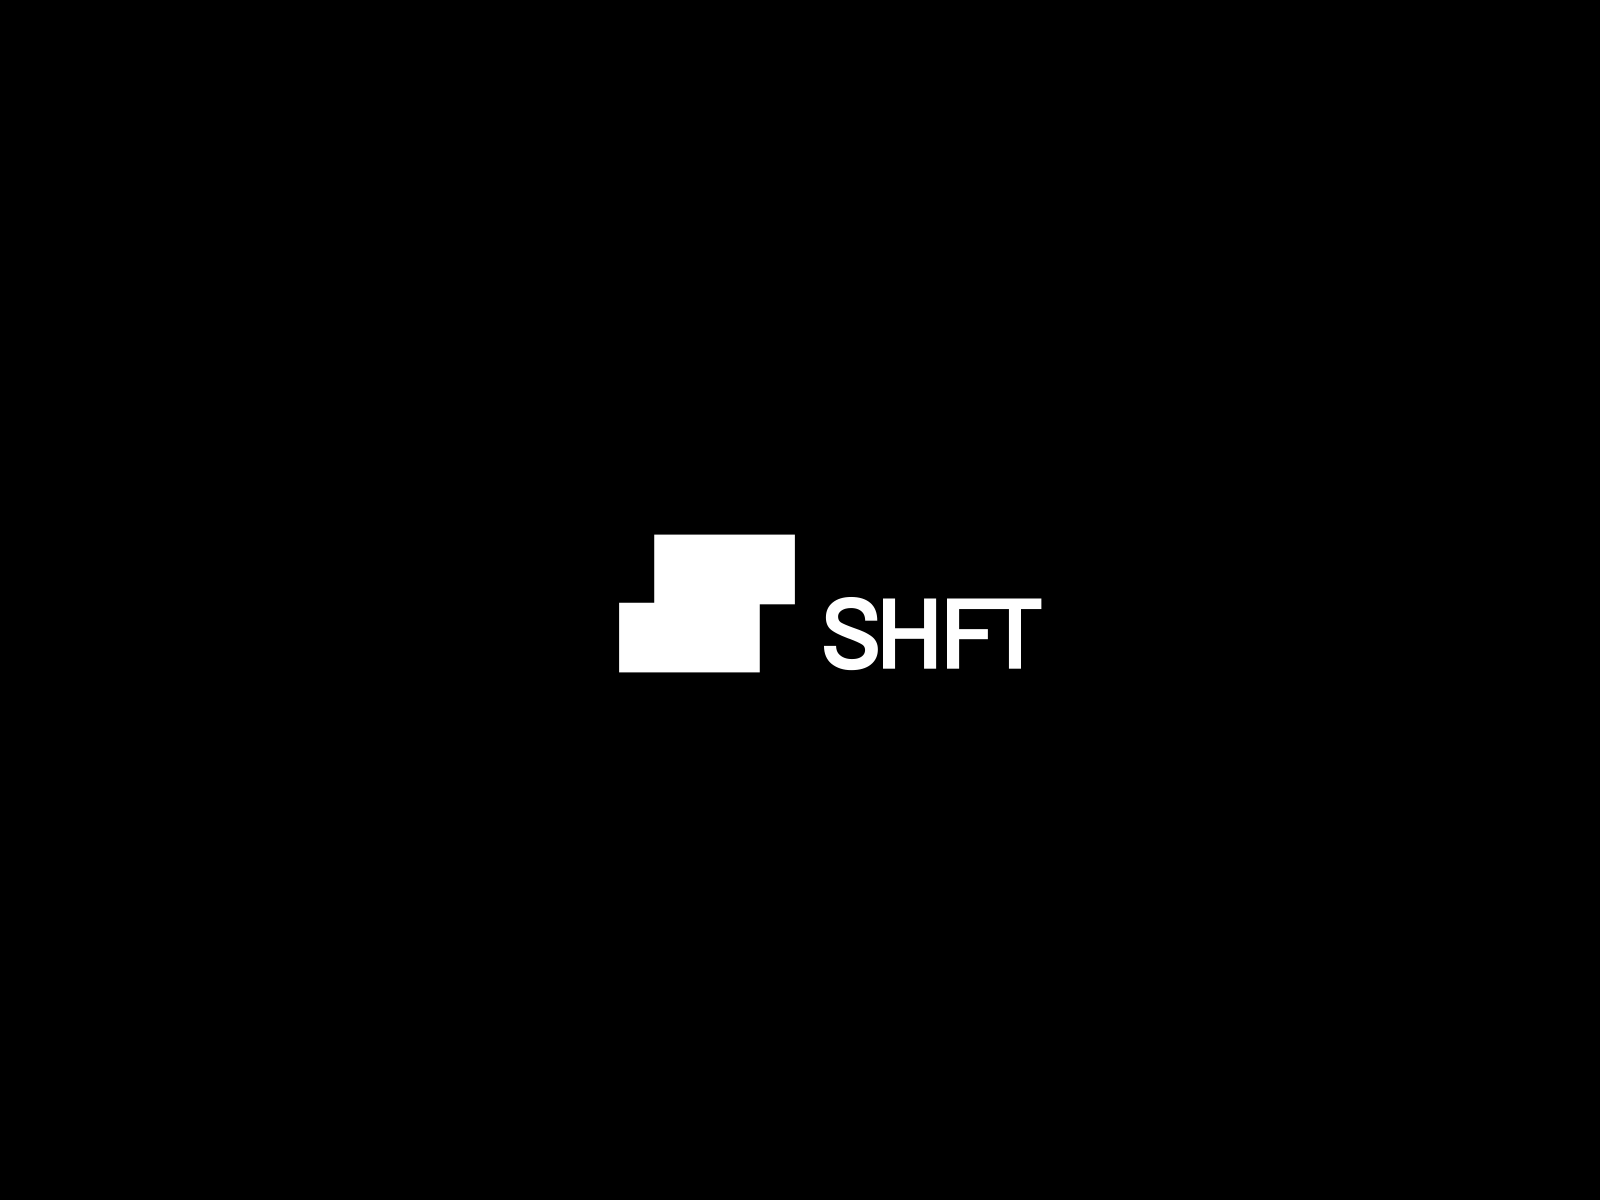 SHFT - Name reveal